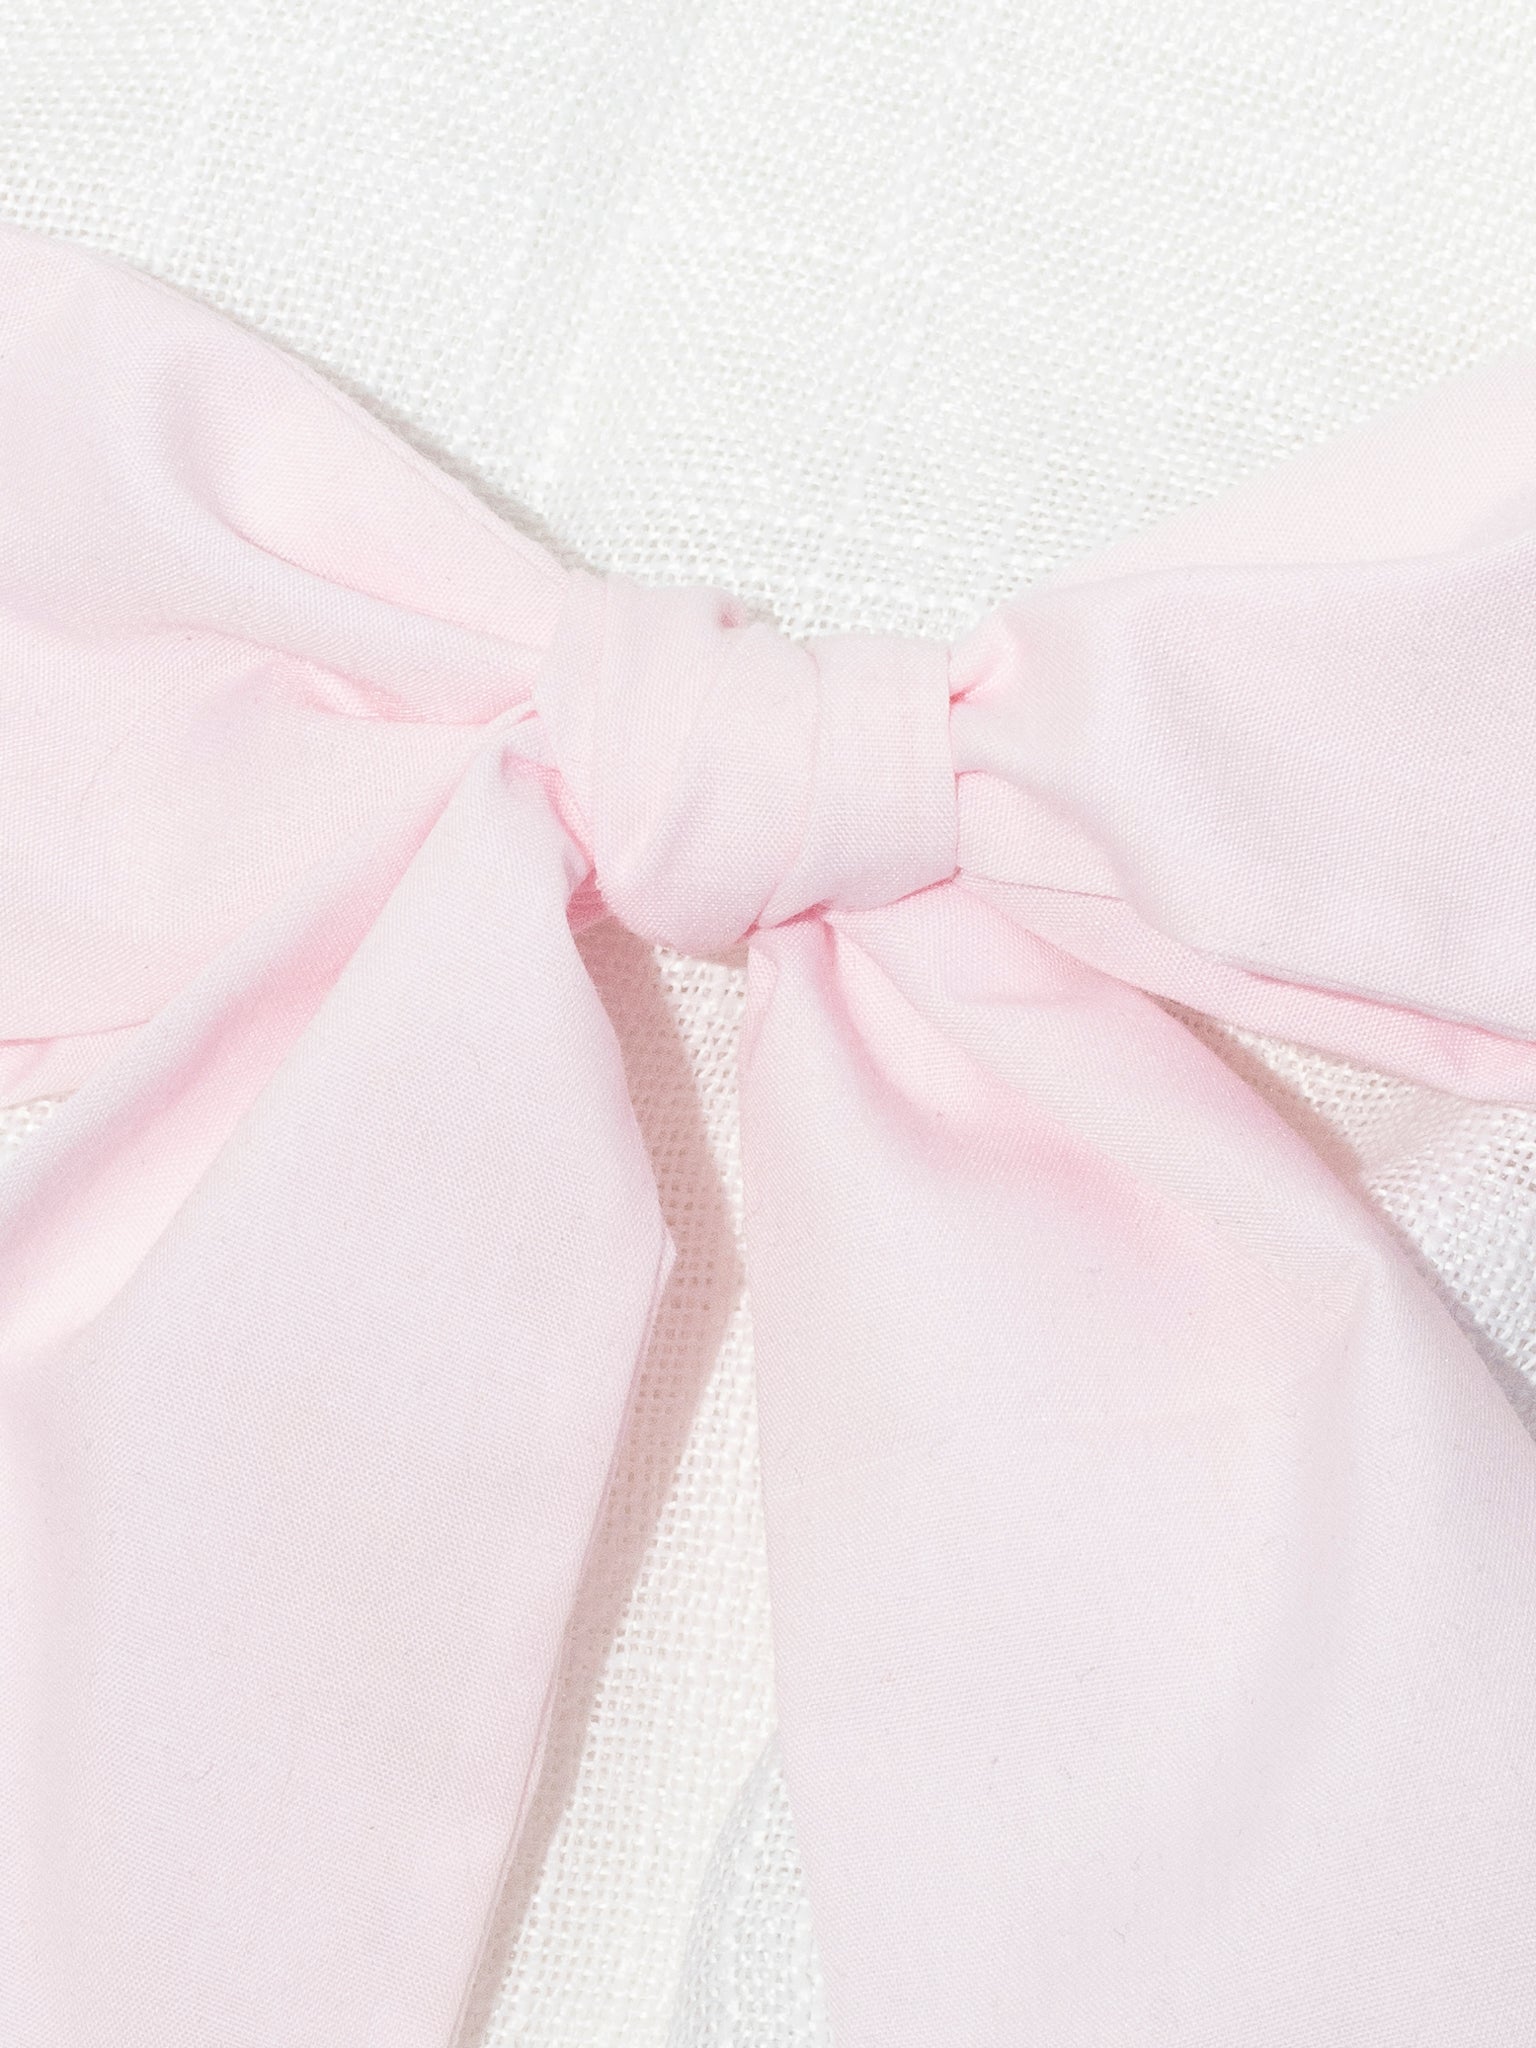 Shop Journal - Pink Grommet Bow